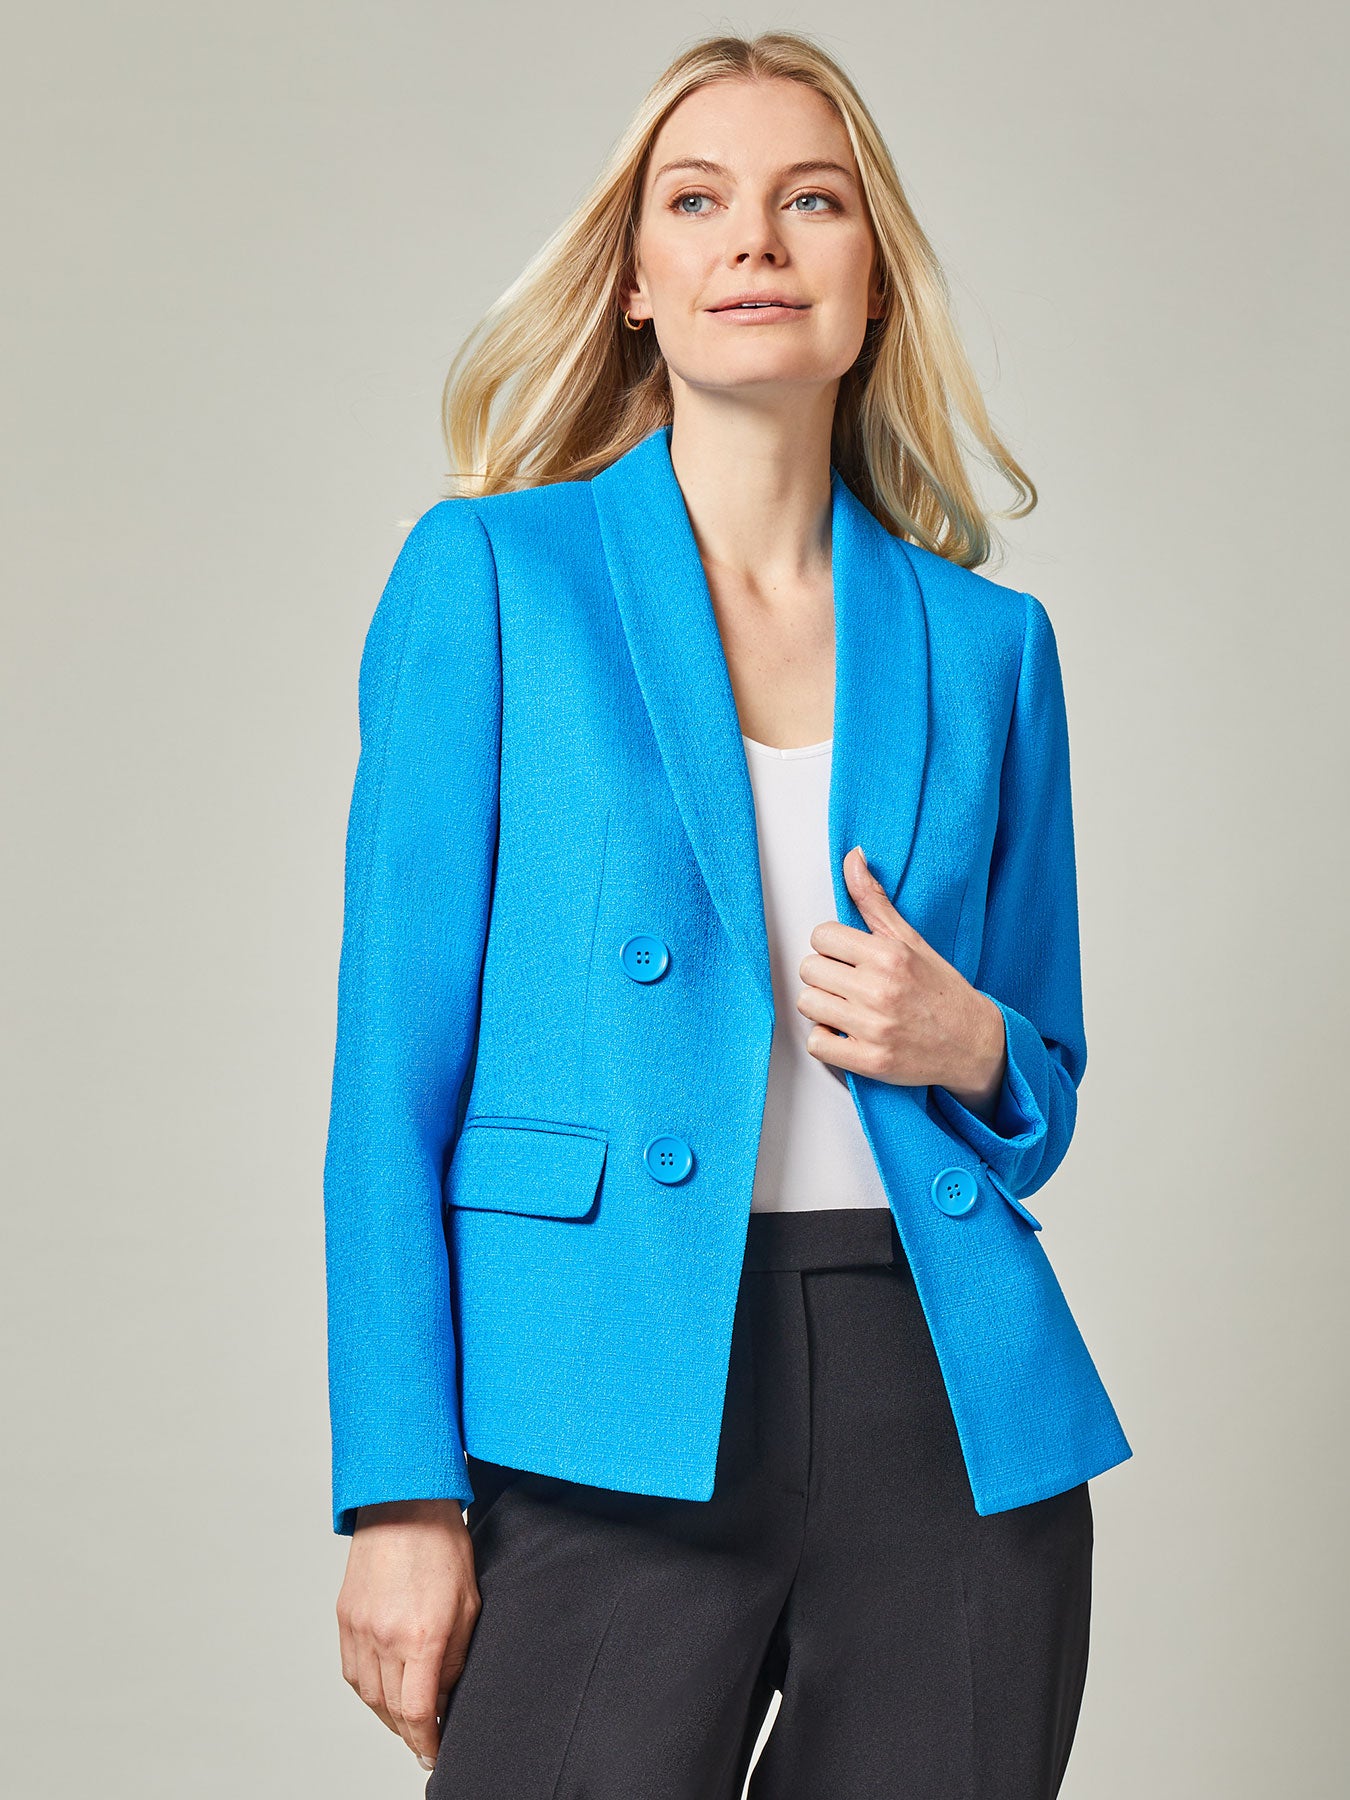 Blazer Blue Set For Women Stripe Long Sleeve Pant Suits Office